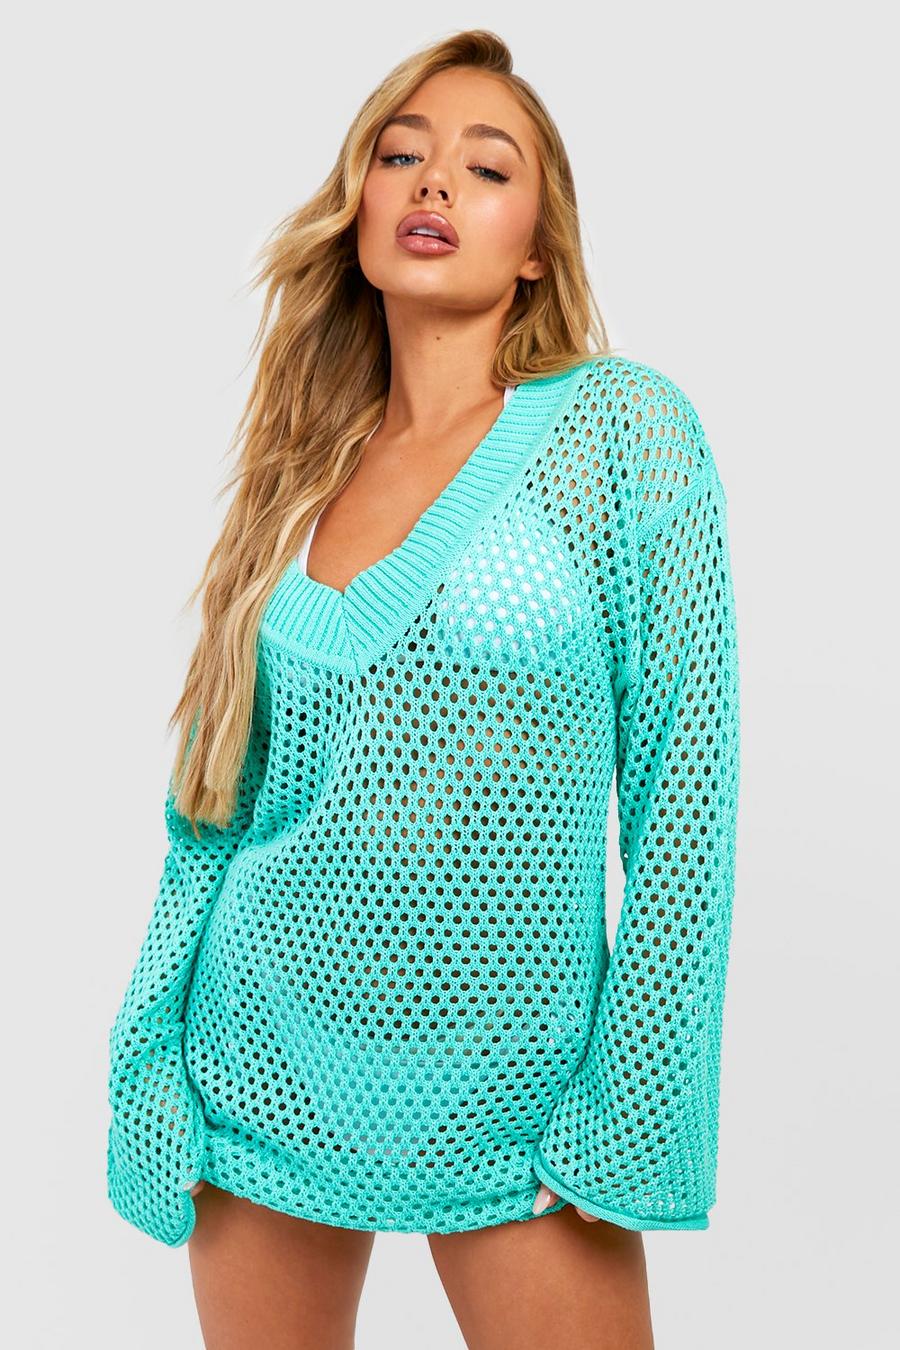 Aqua Crochet Plunge Cover Up Beach Dress image number 1